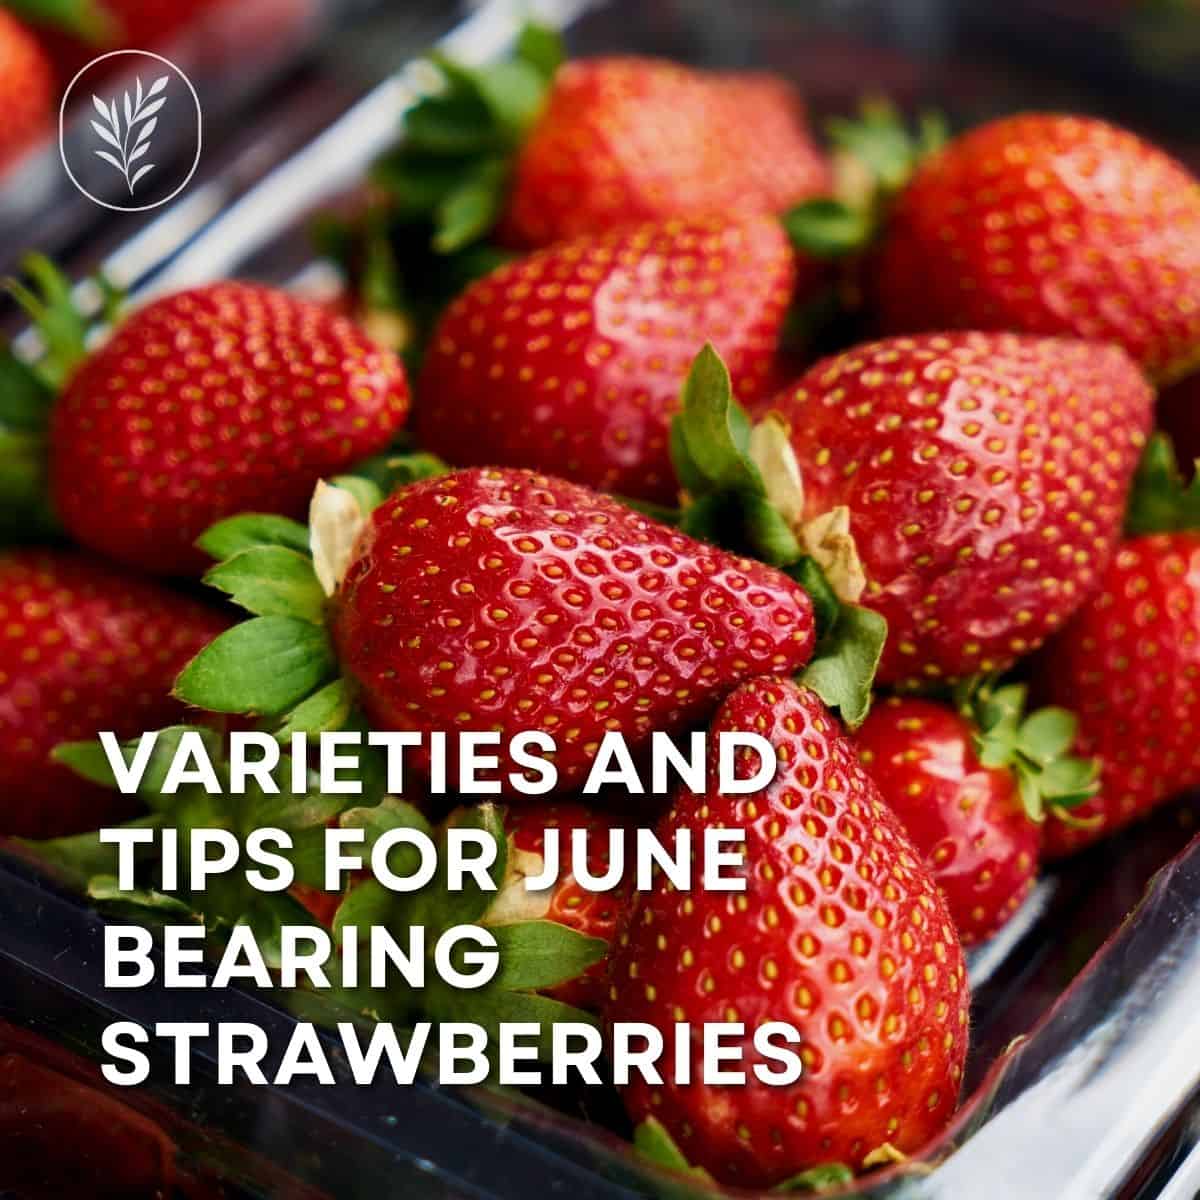 Varieties and tips for june bearing strawberries - instagram via @home4theharvest